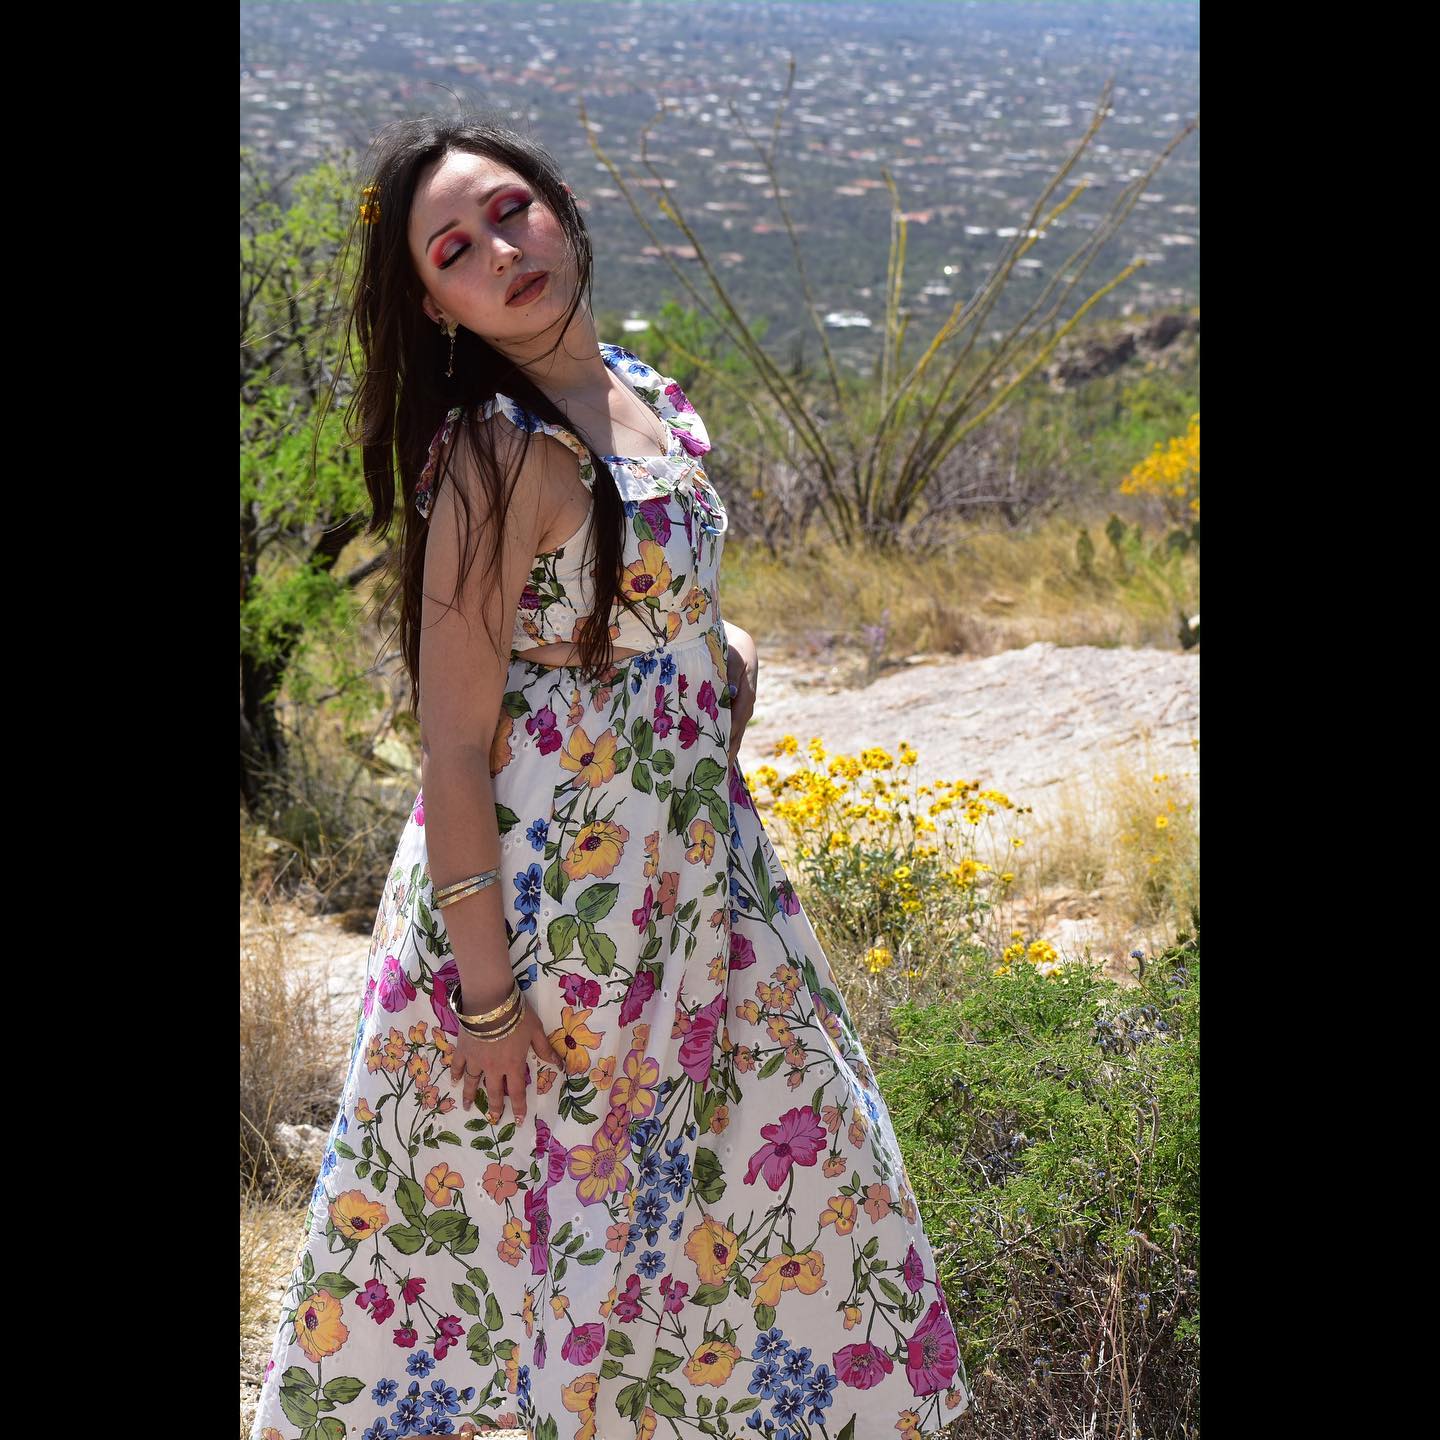 Reyhana, the desert flower 🌼

•••••••••••••••••••••••••

#lightfromreyhana #xoprincessbaby #xobratqueen #reyhanapluseric #ReyhanaWorld #reyhana #VooBville #ezmagazine #tucson #tucsonarizona #tucsonmodel #arizonamodel #bookme #explorepage #model #travelmodel #downtowntucson #glamourmodel #photography #messageme #nevernude #lfreyhana